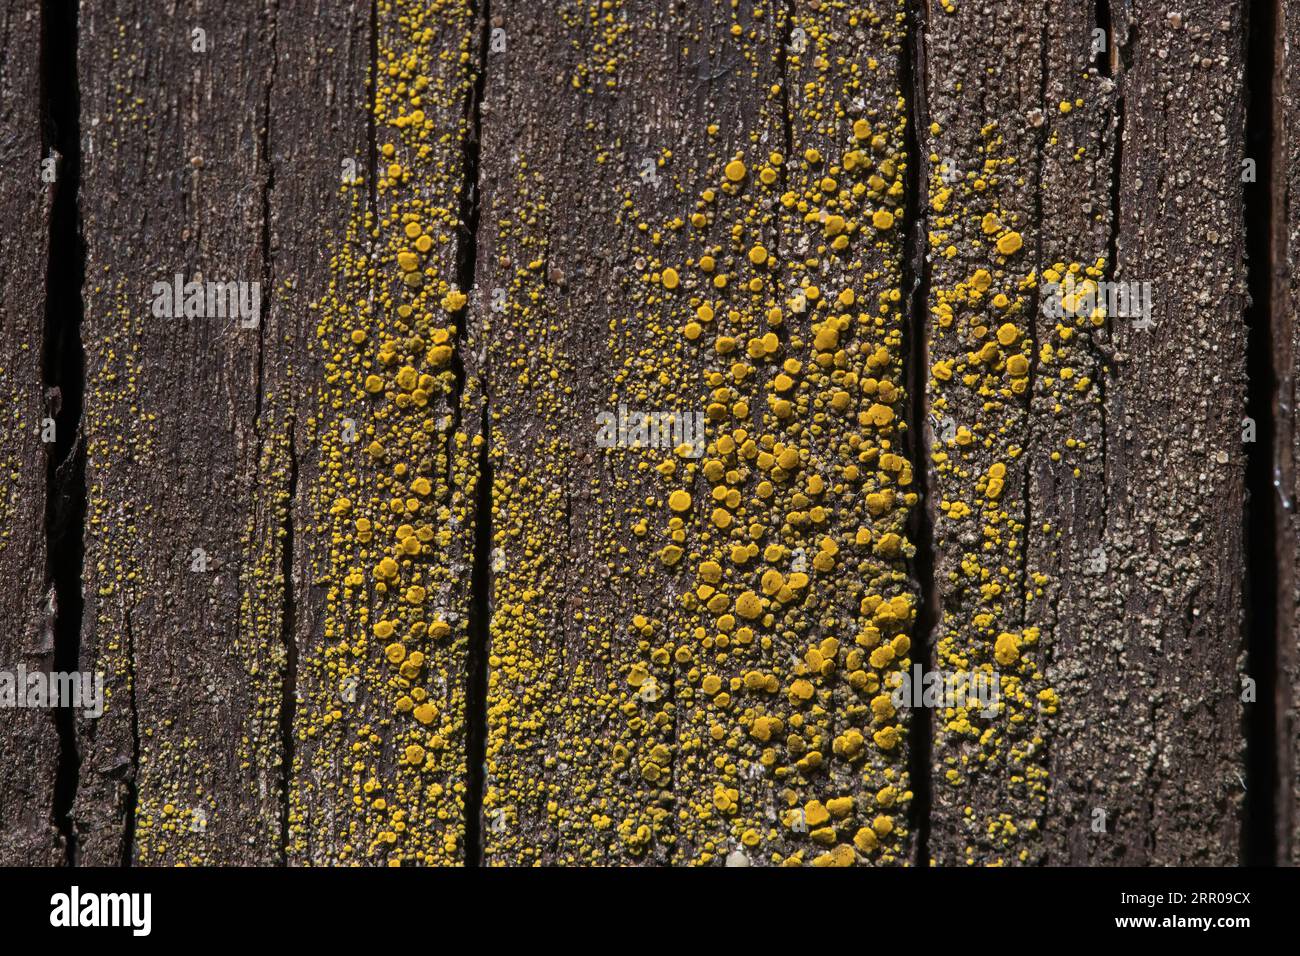 old wood texture Stock Photo